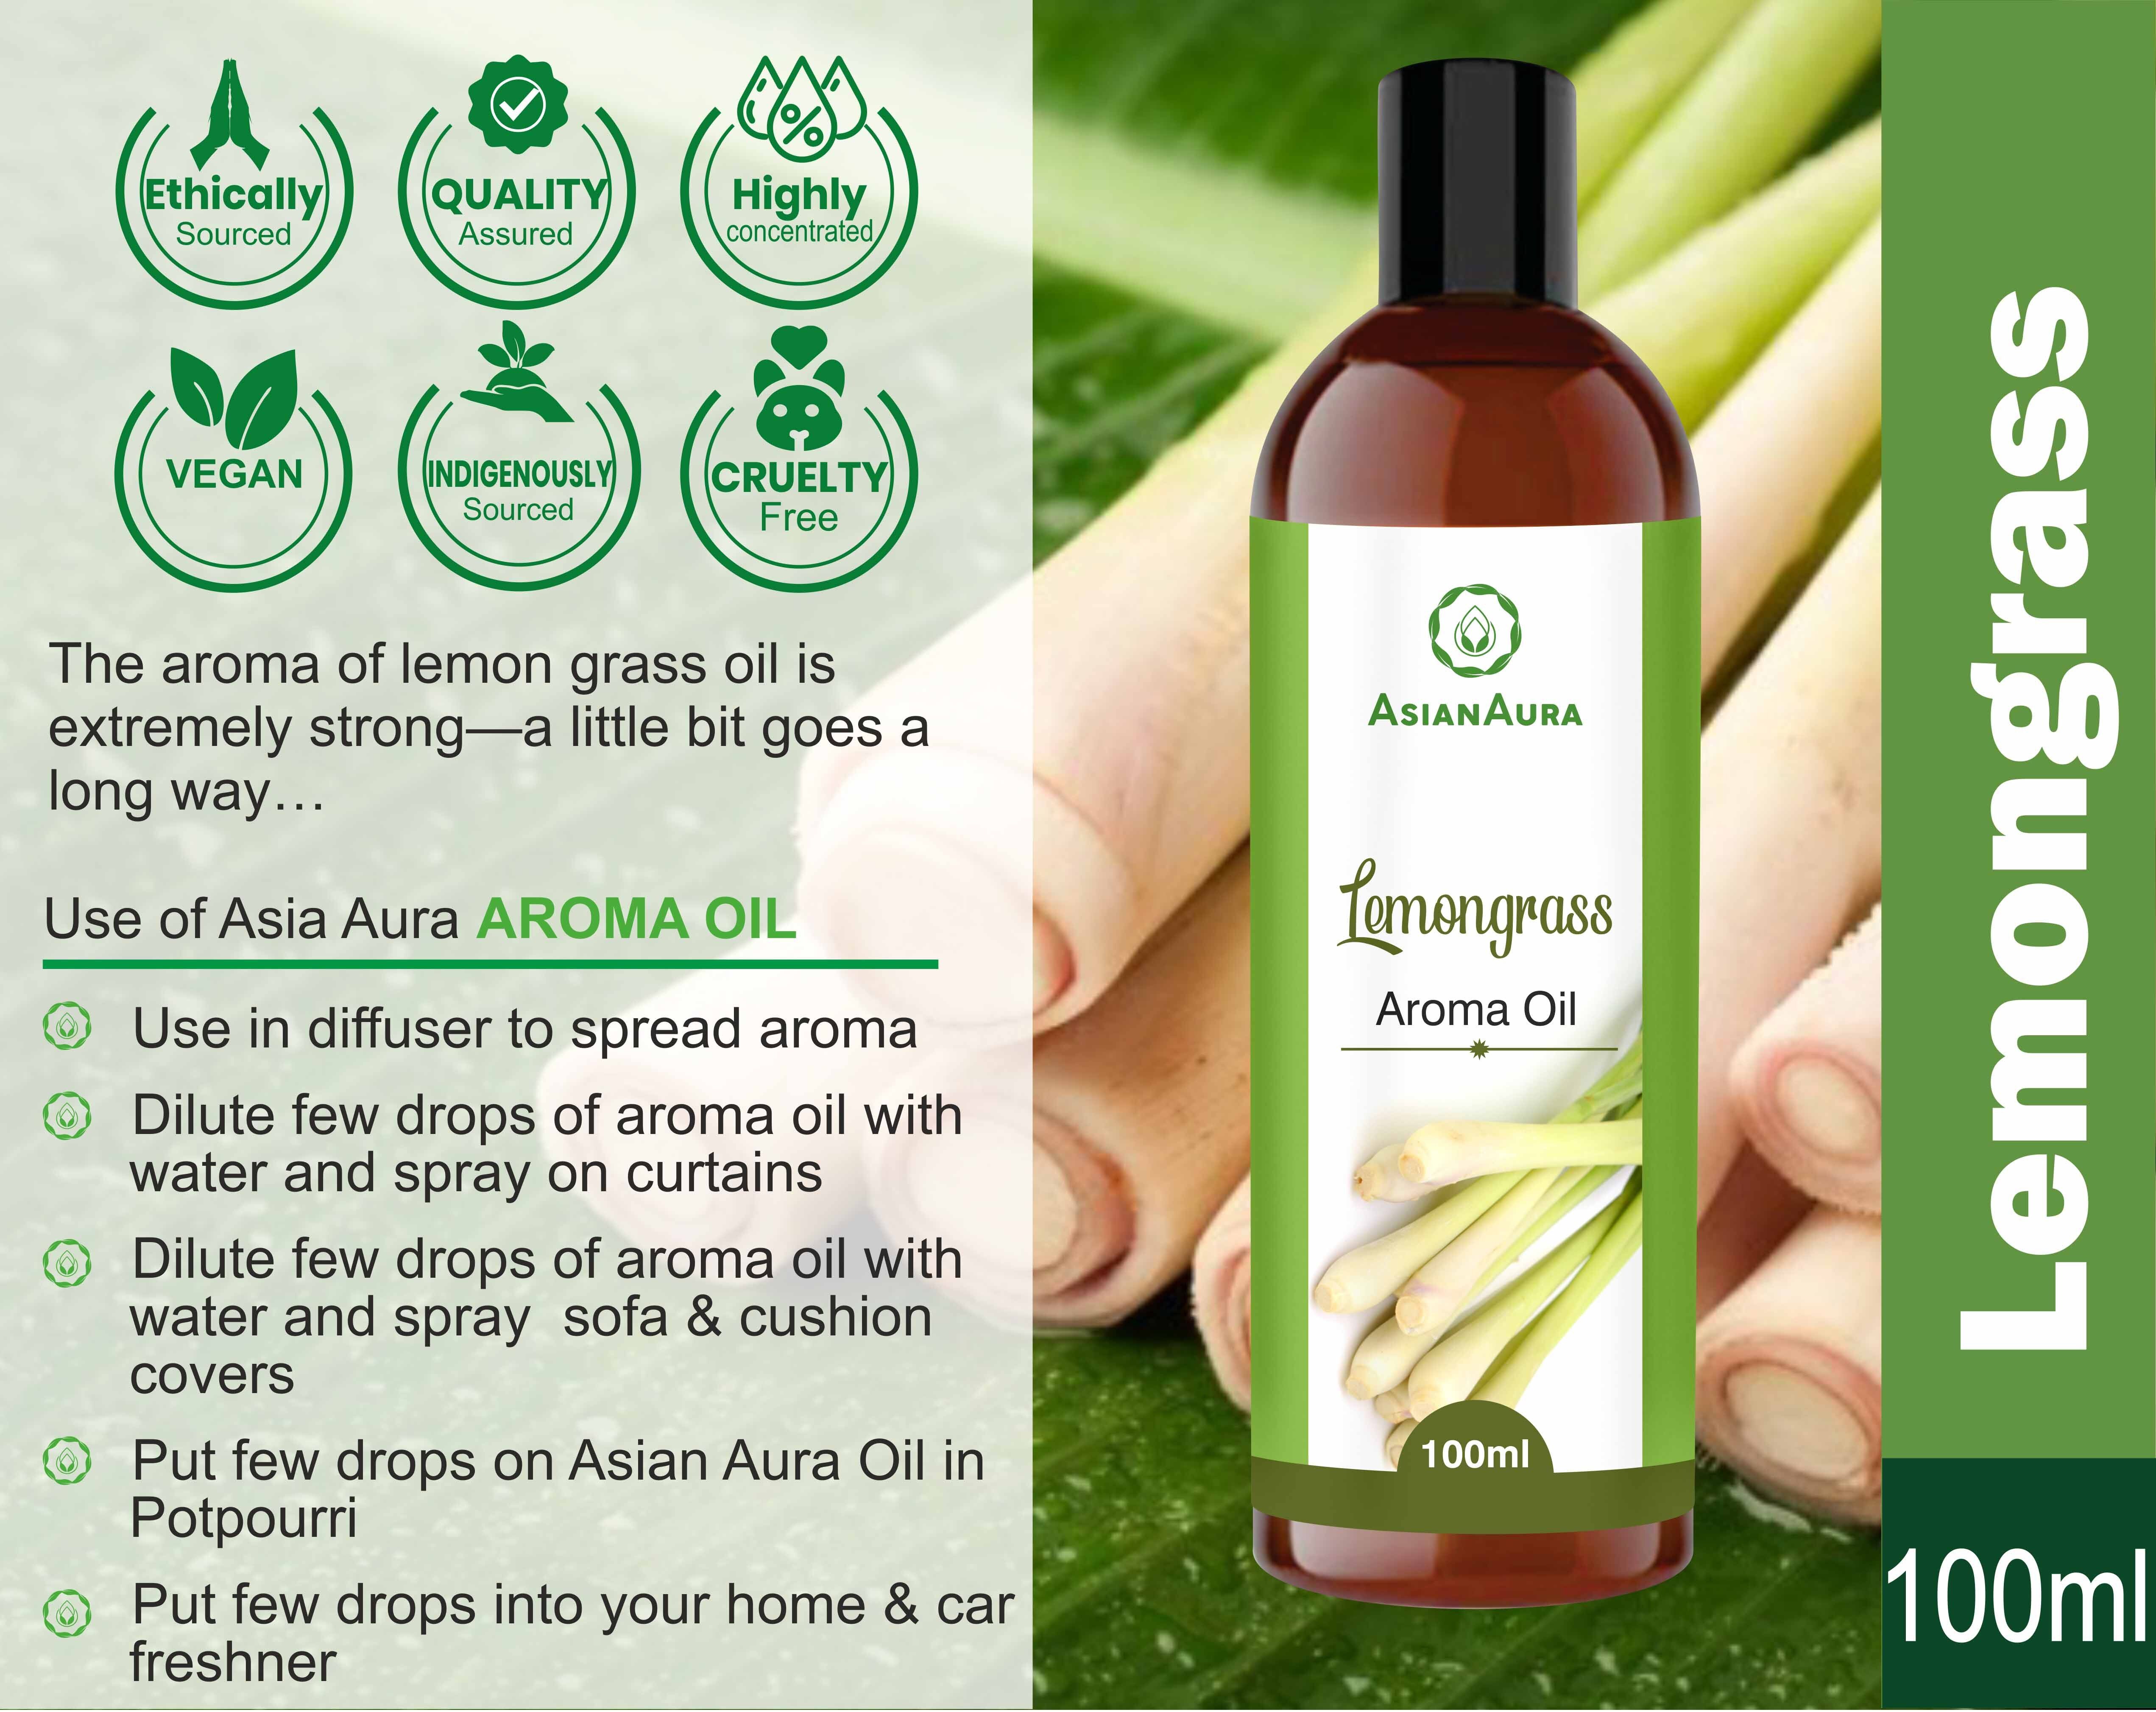 Asian Aura Lemongrass Flavour 100ml Aroma oil